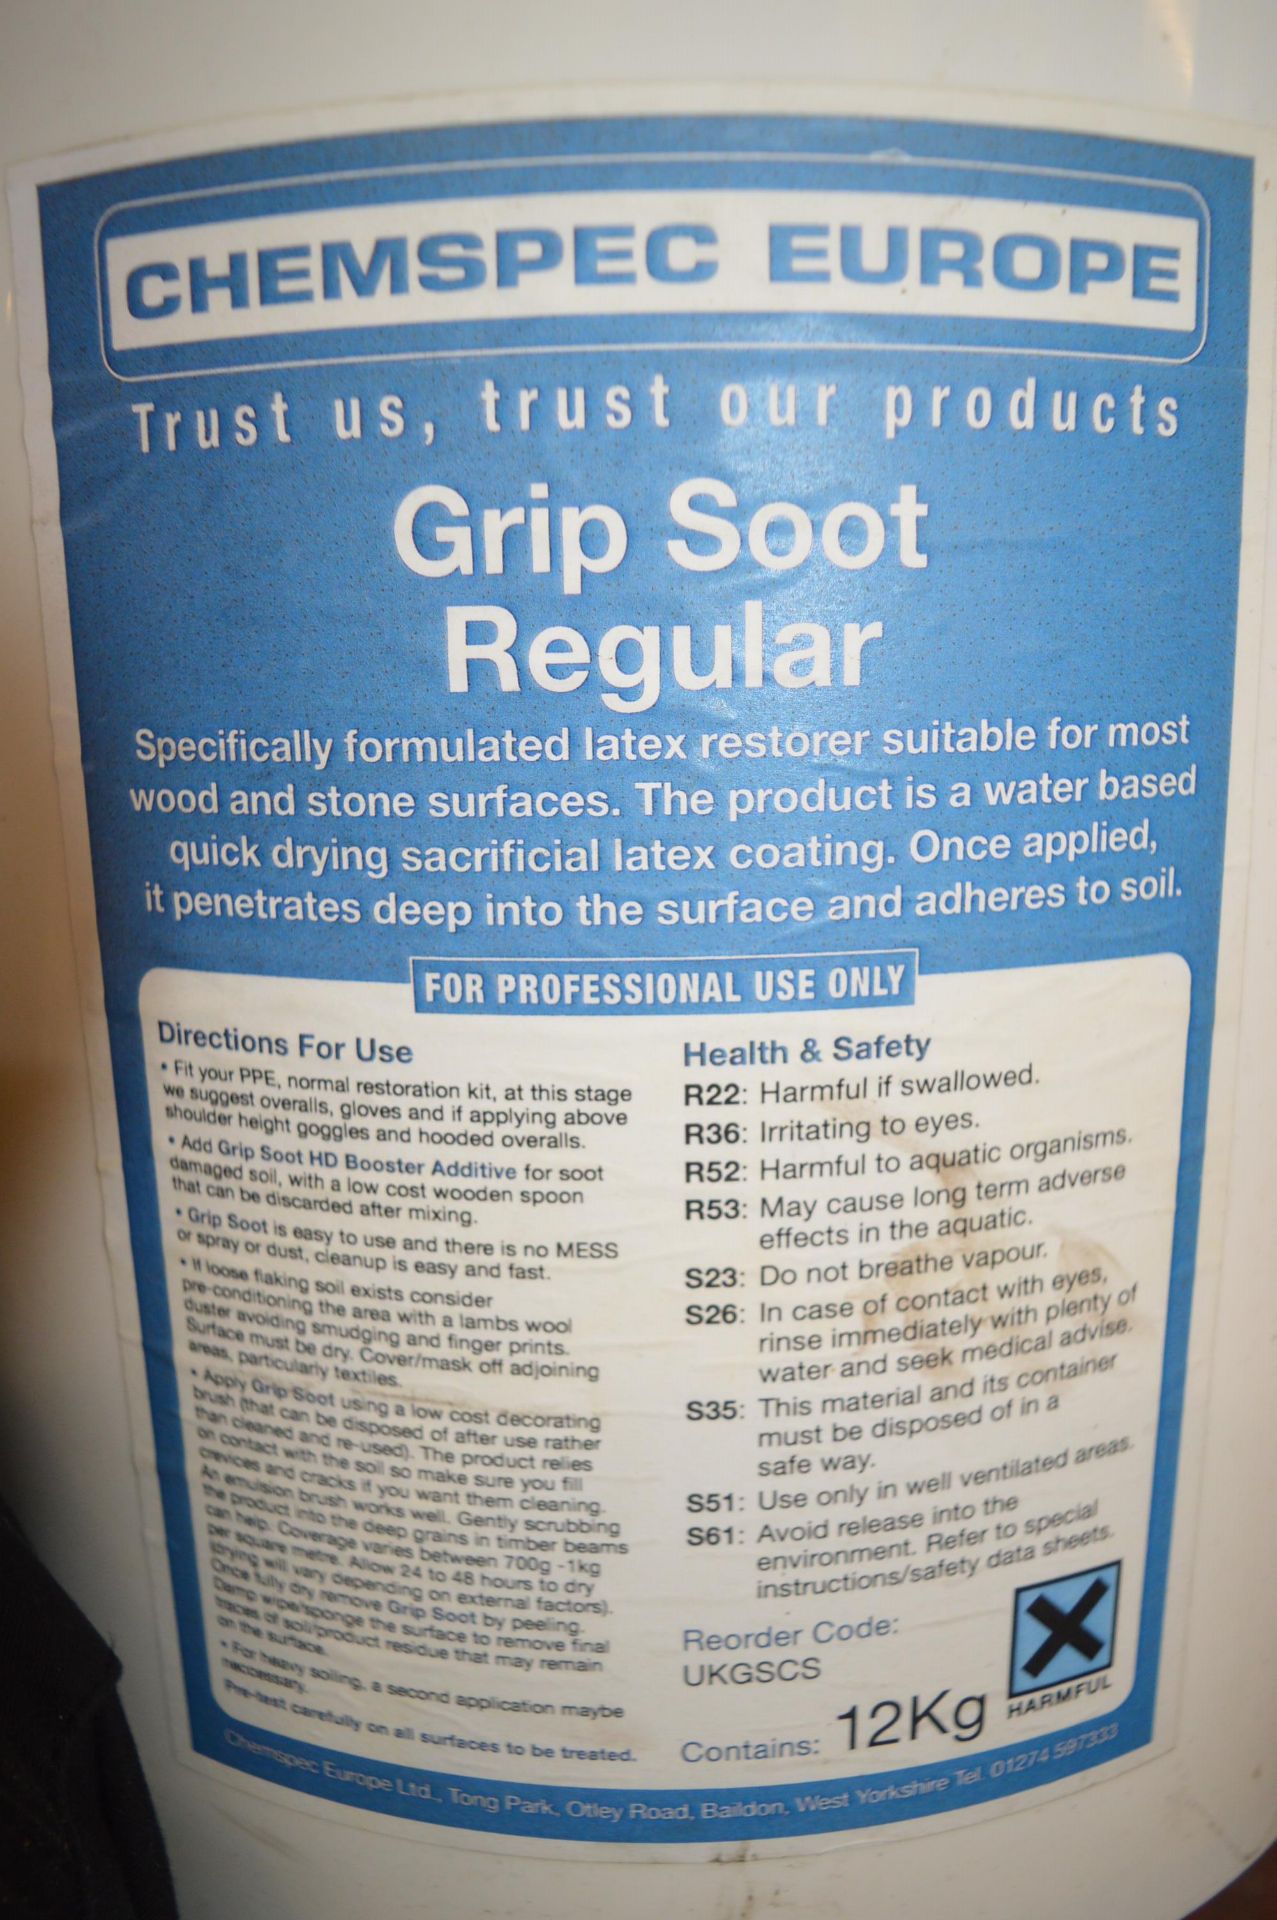 12kg of Grip Soot Regular